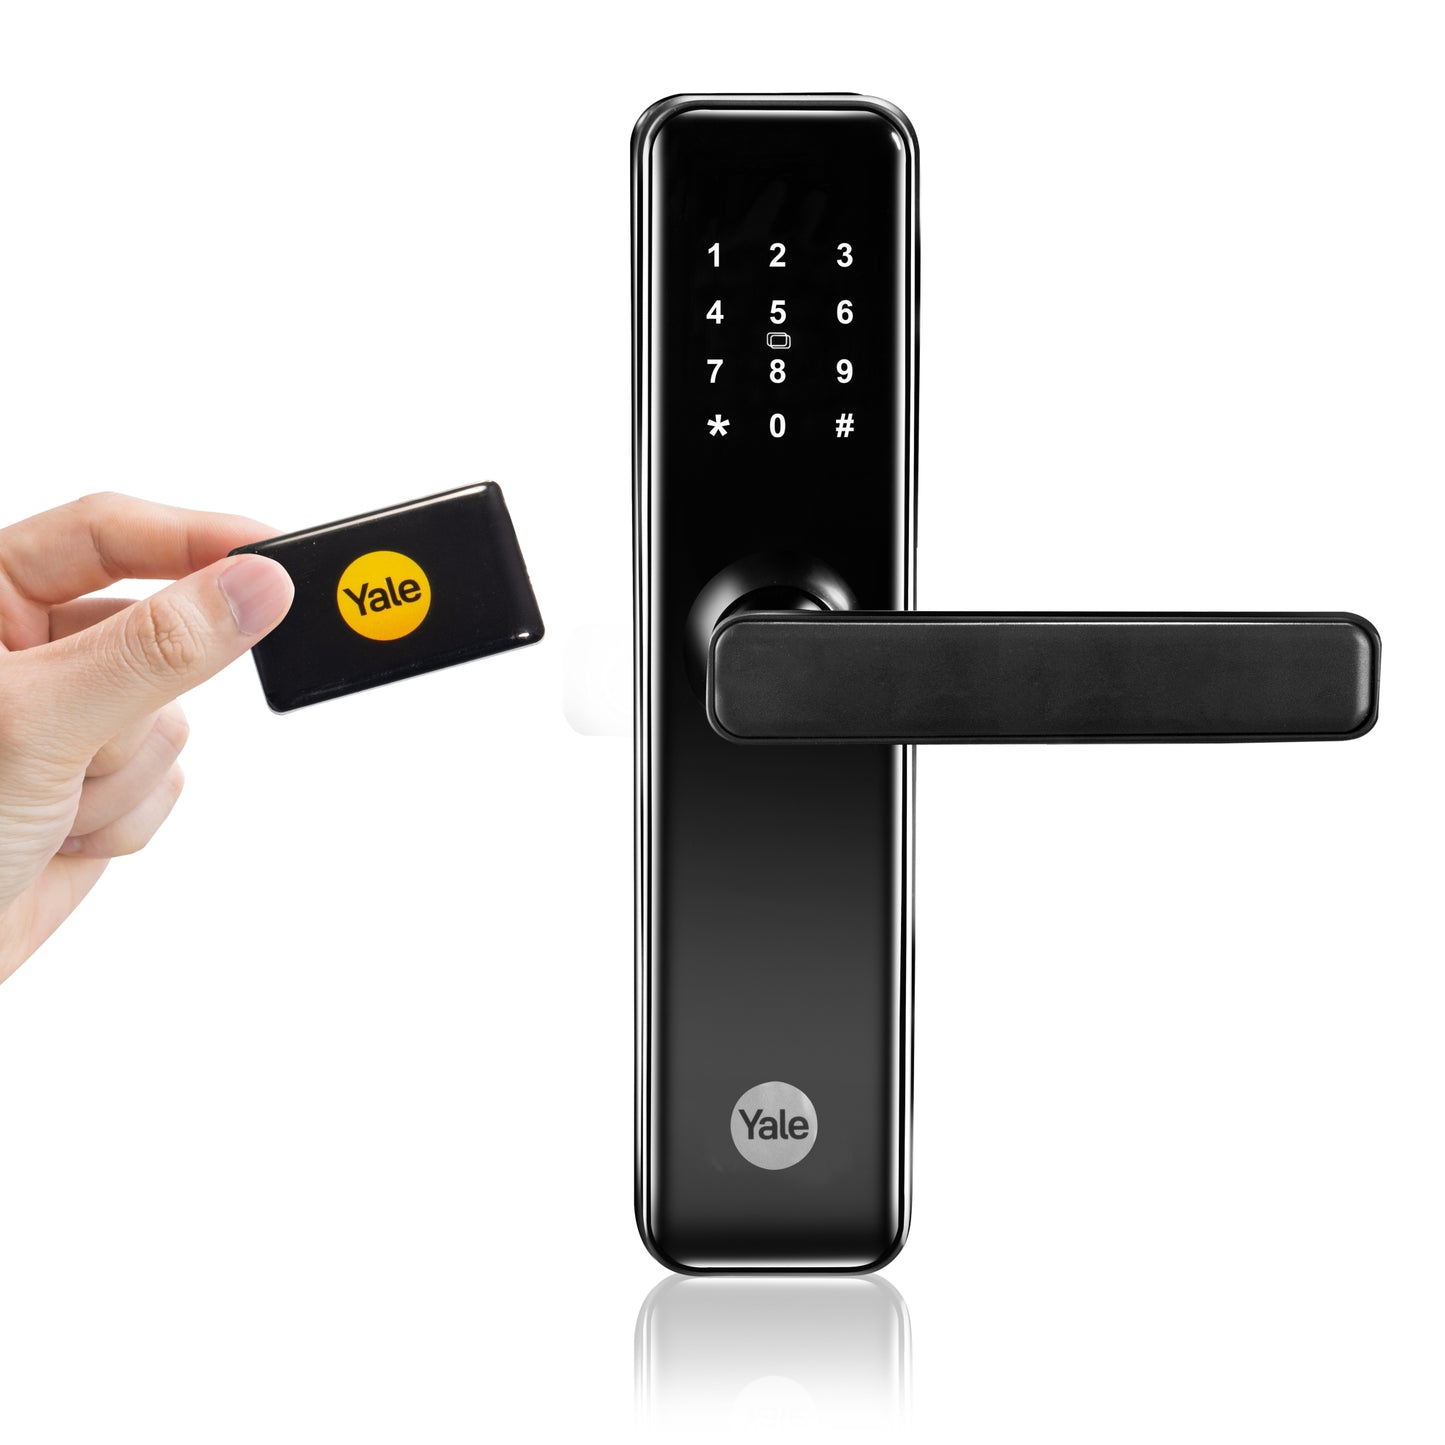 YDME50Pro Smart Door Lock, Black, PIN, RFID, Manual Key Access